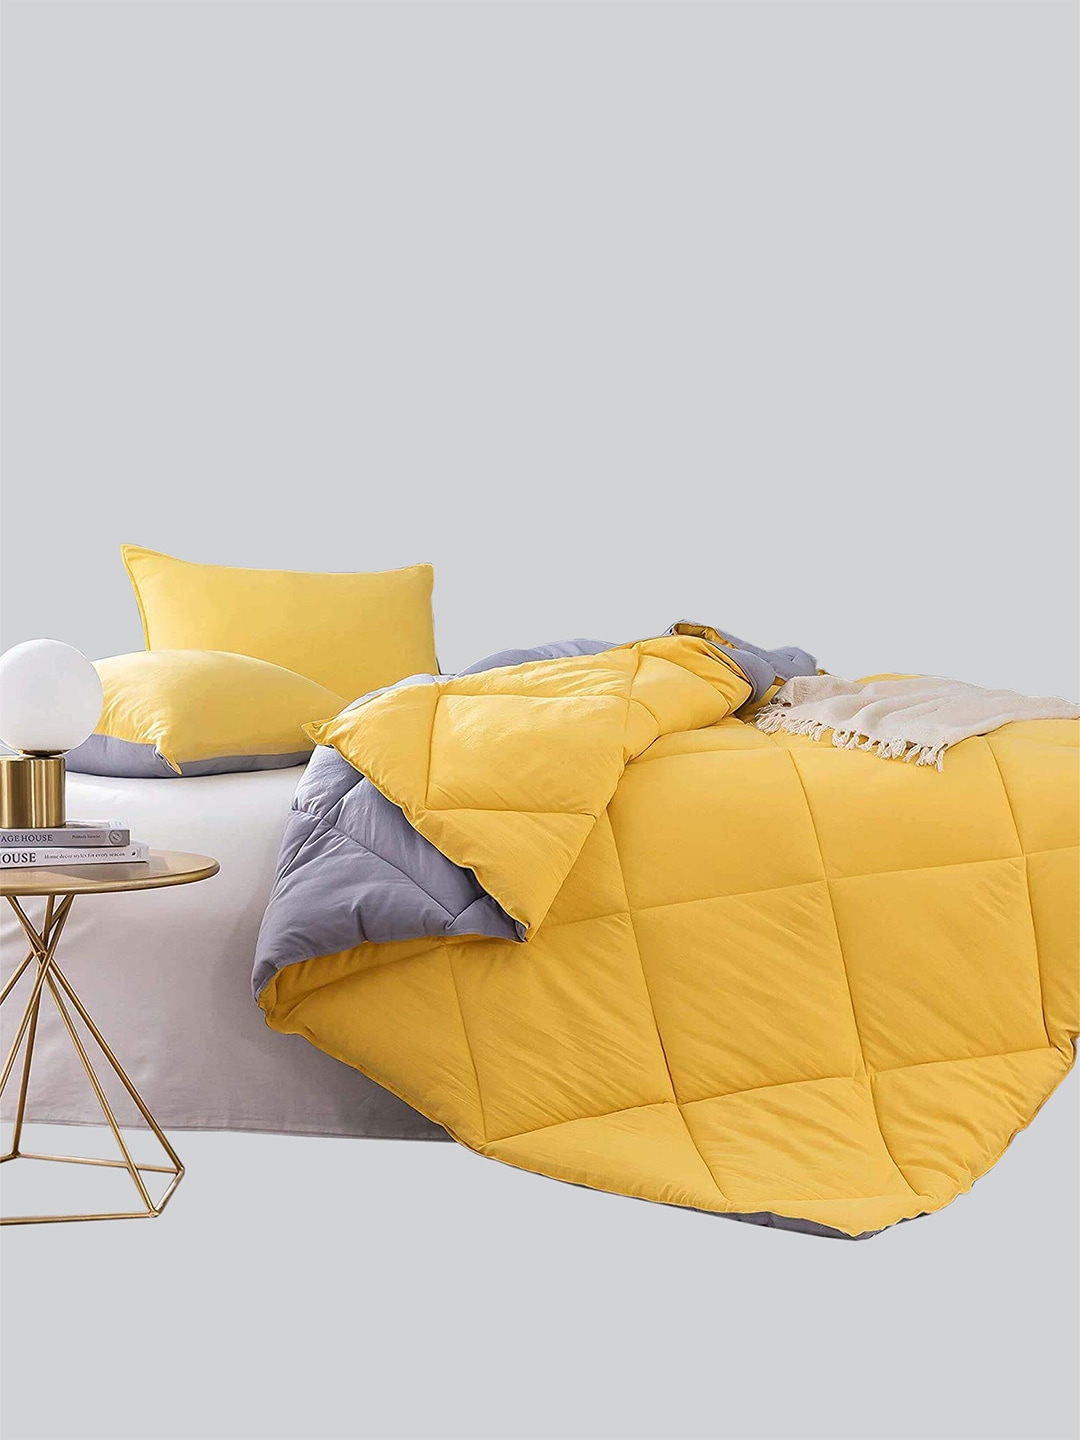 RAASO Yellow & Grey Microfiber AC Room Reversible Double Bed Blanket Price in India